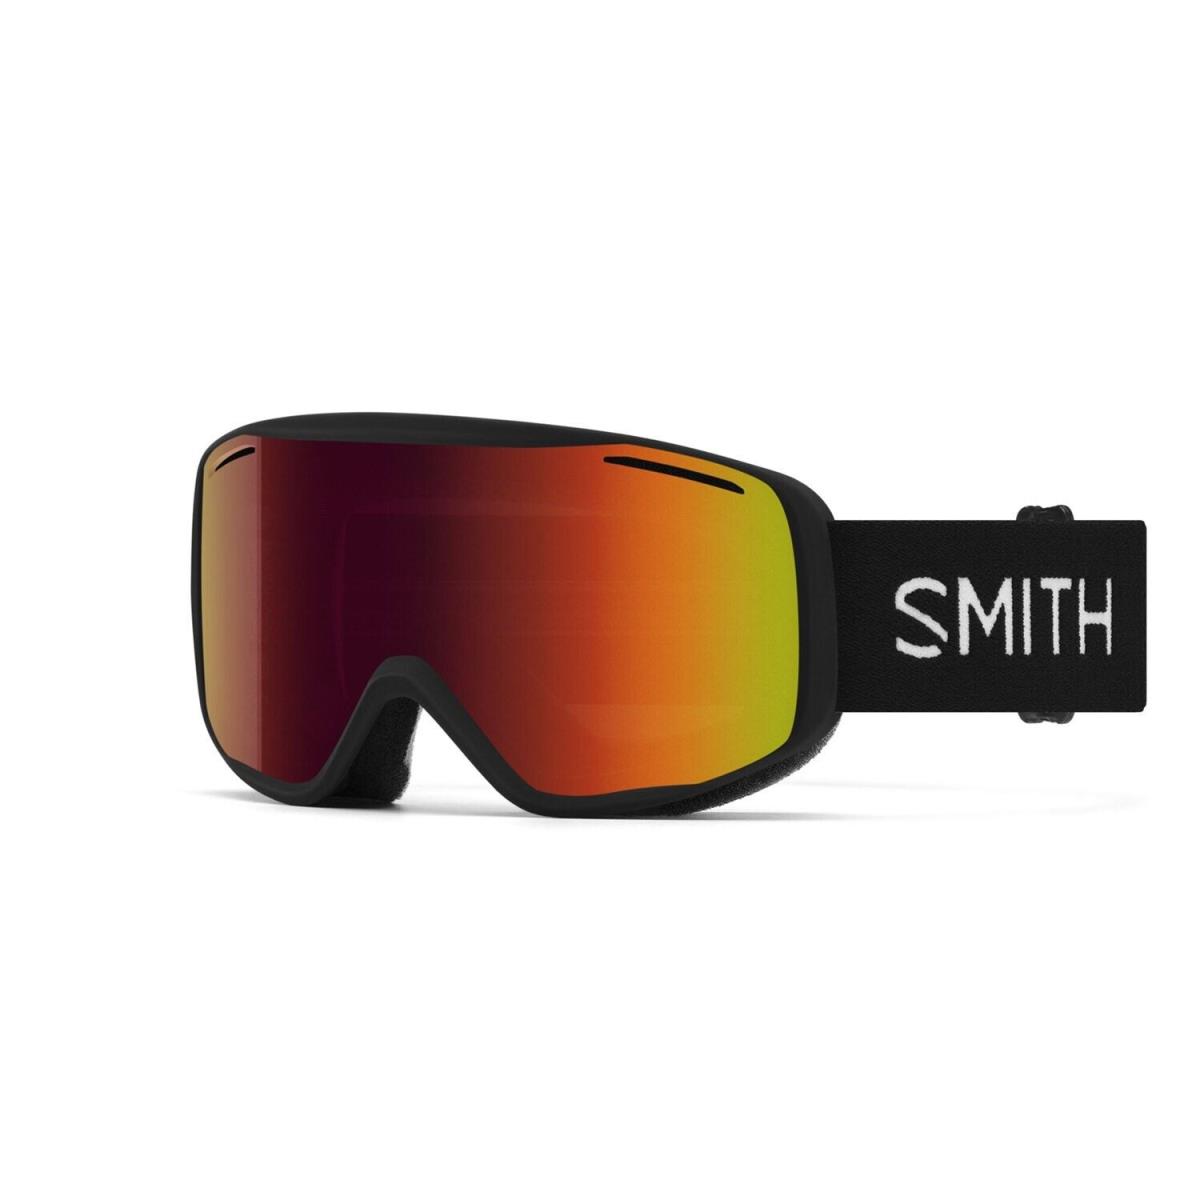 Smith Rally Ski / Snow Goggles Black Frame Red Sol-x Mirror Lens